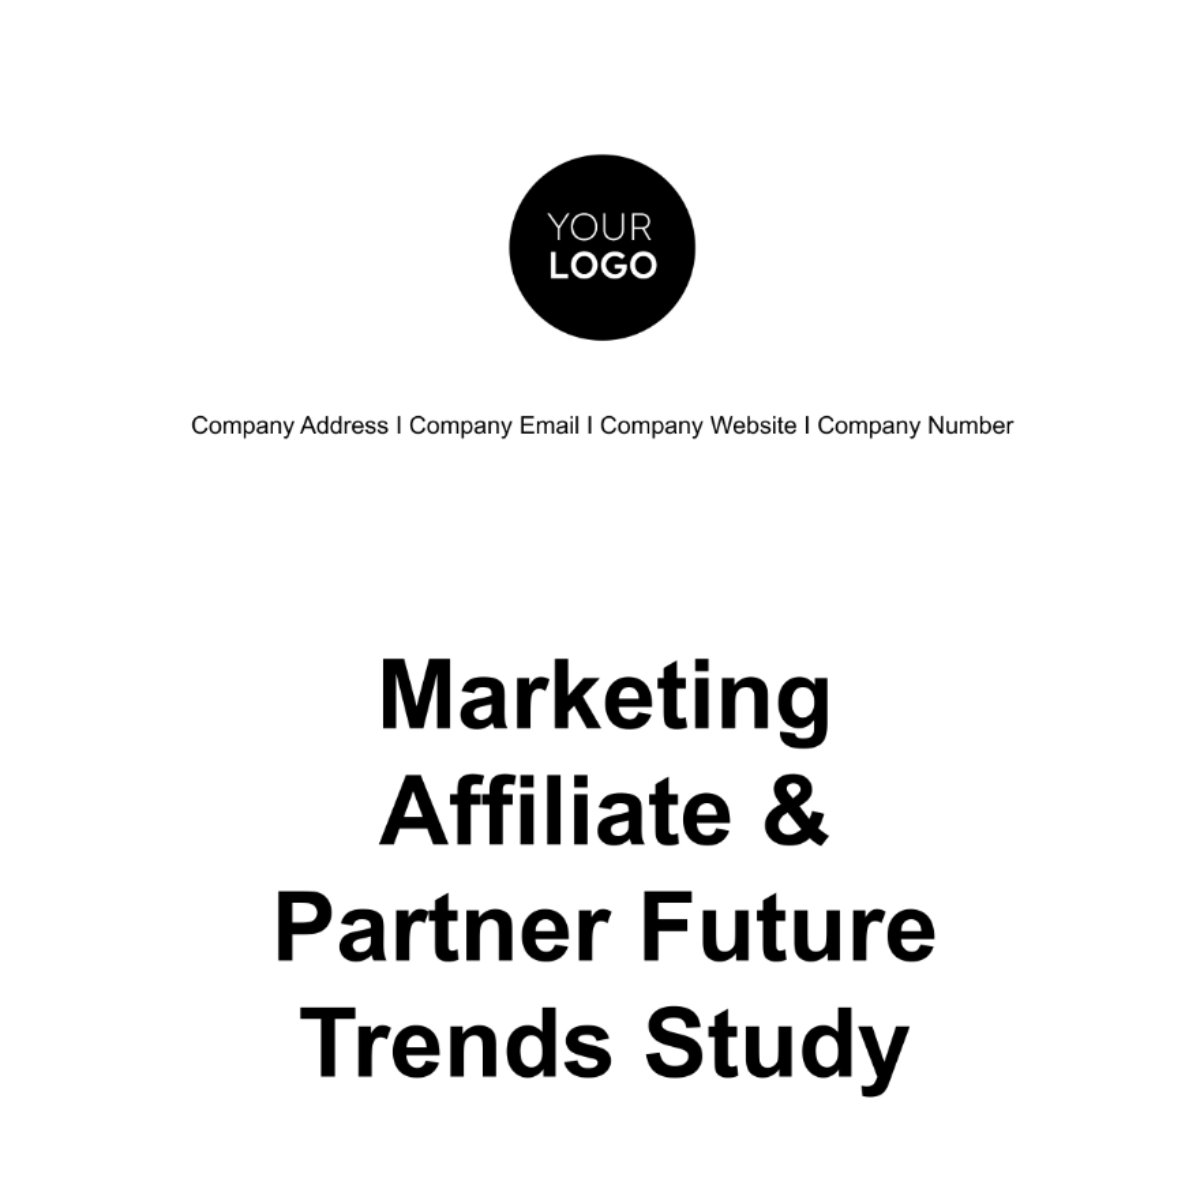 Marketing Affiliate & Partner Future Trends Study Template